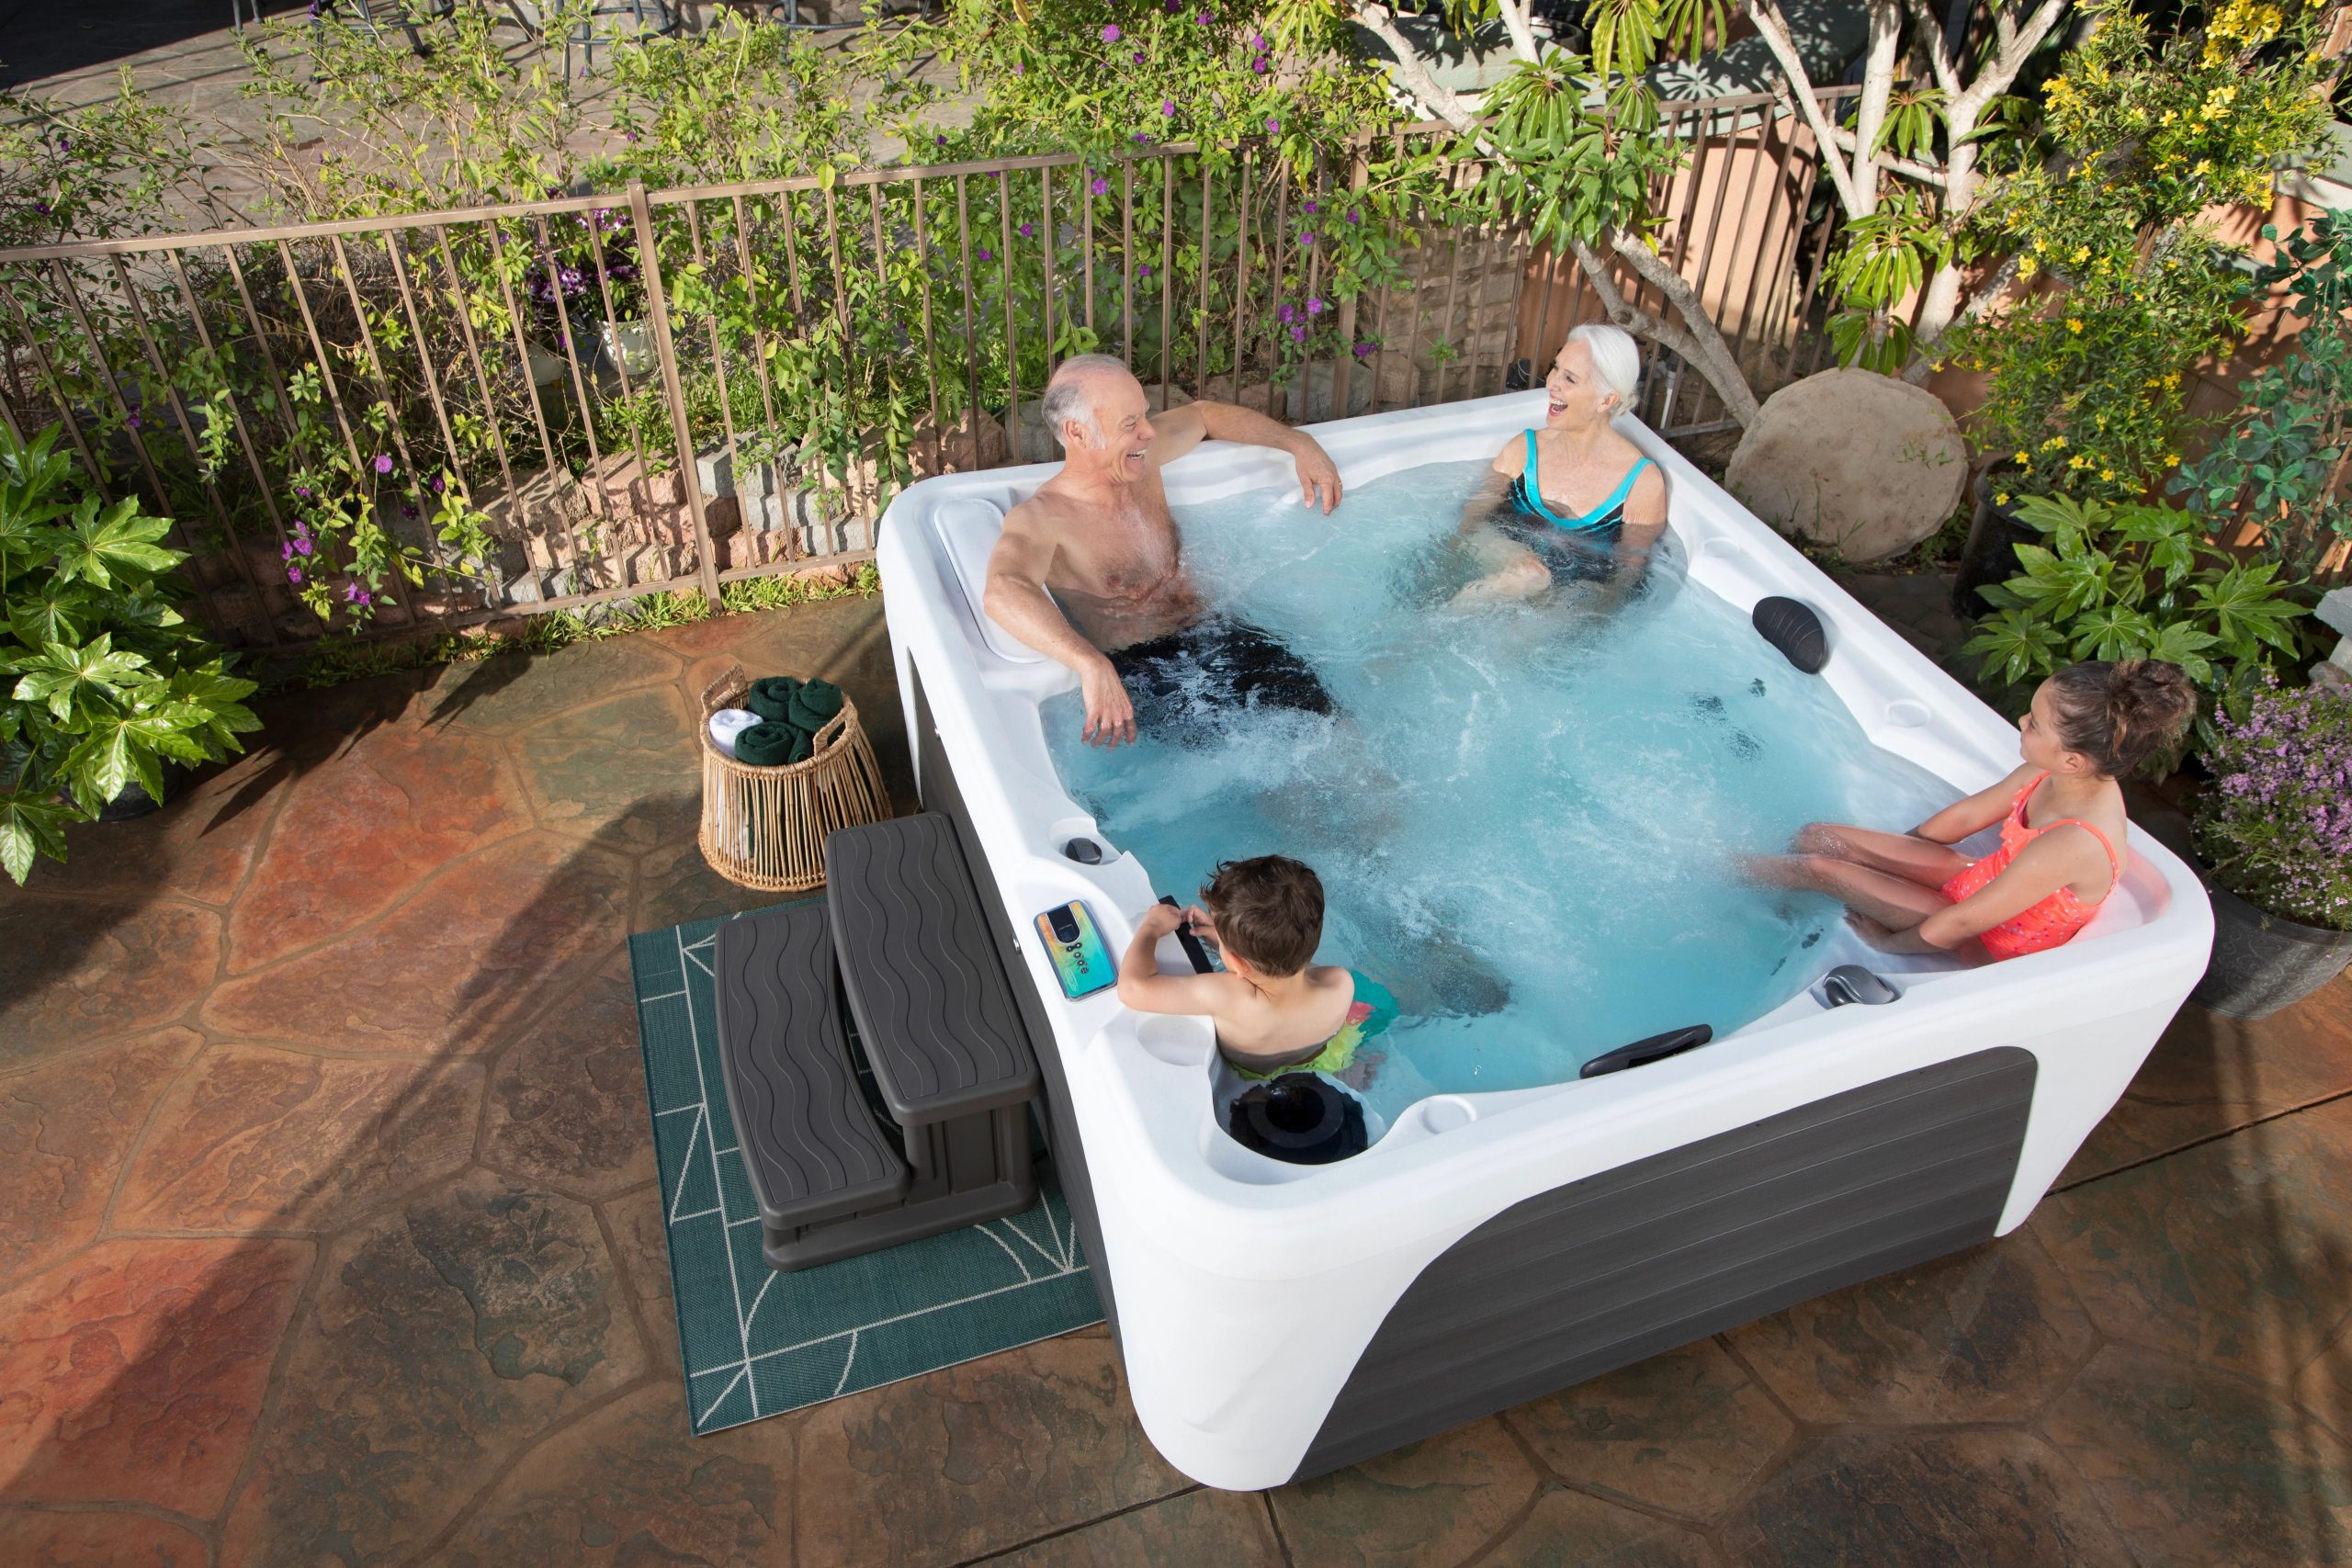 family enjoying a soak in a fantasy entice 5 person plug n play hot tub in their backyard on a paver patio